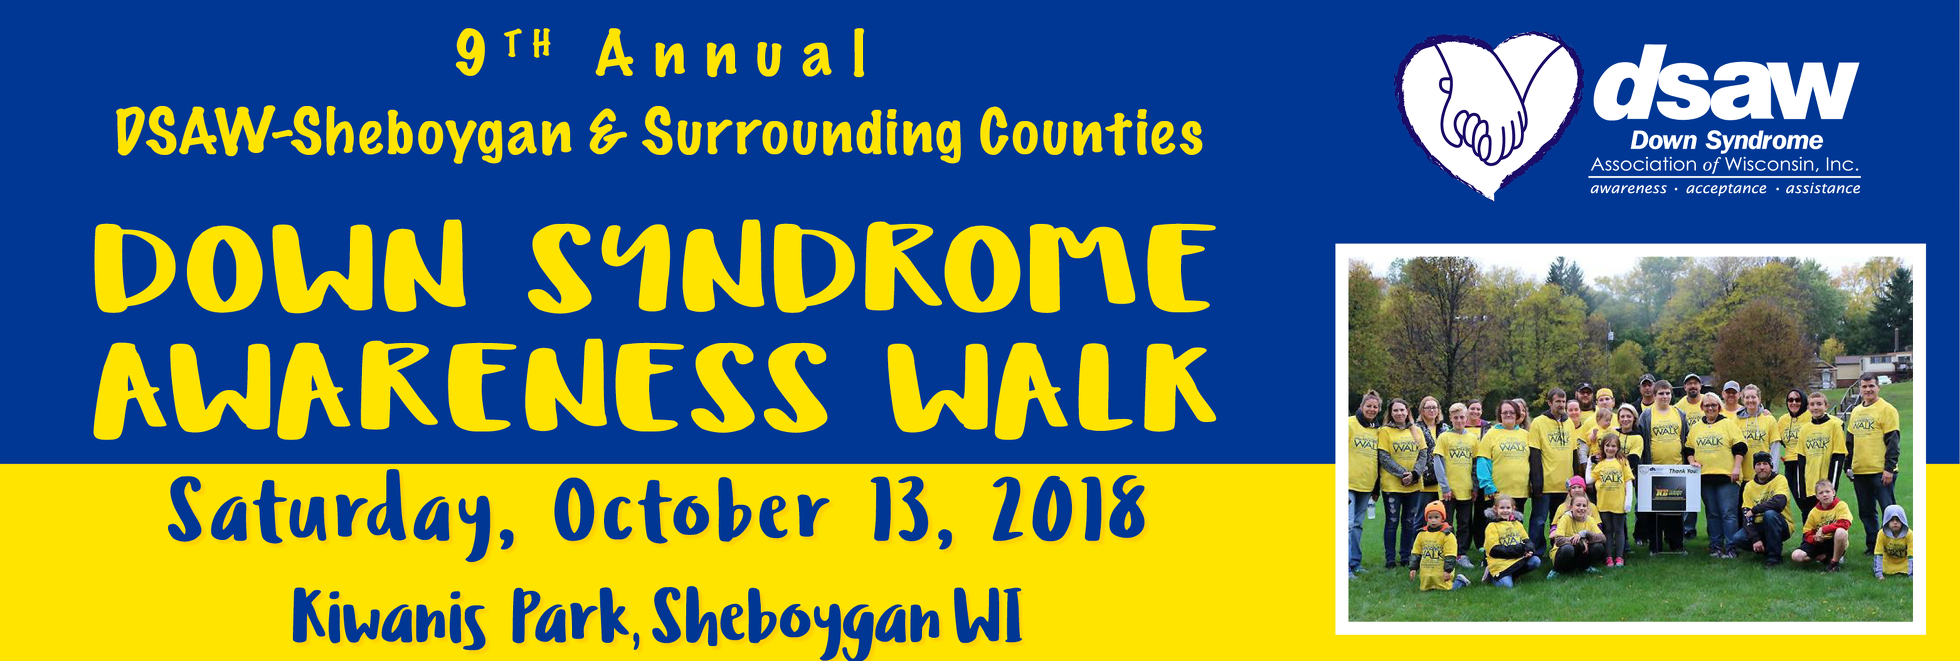 Sheboygan Down Syndrome Awareness Walk 2018